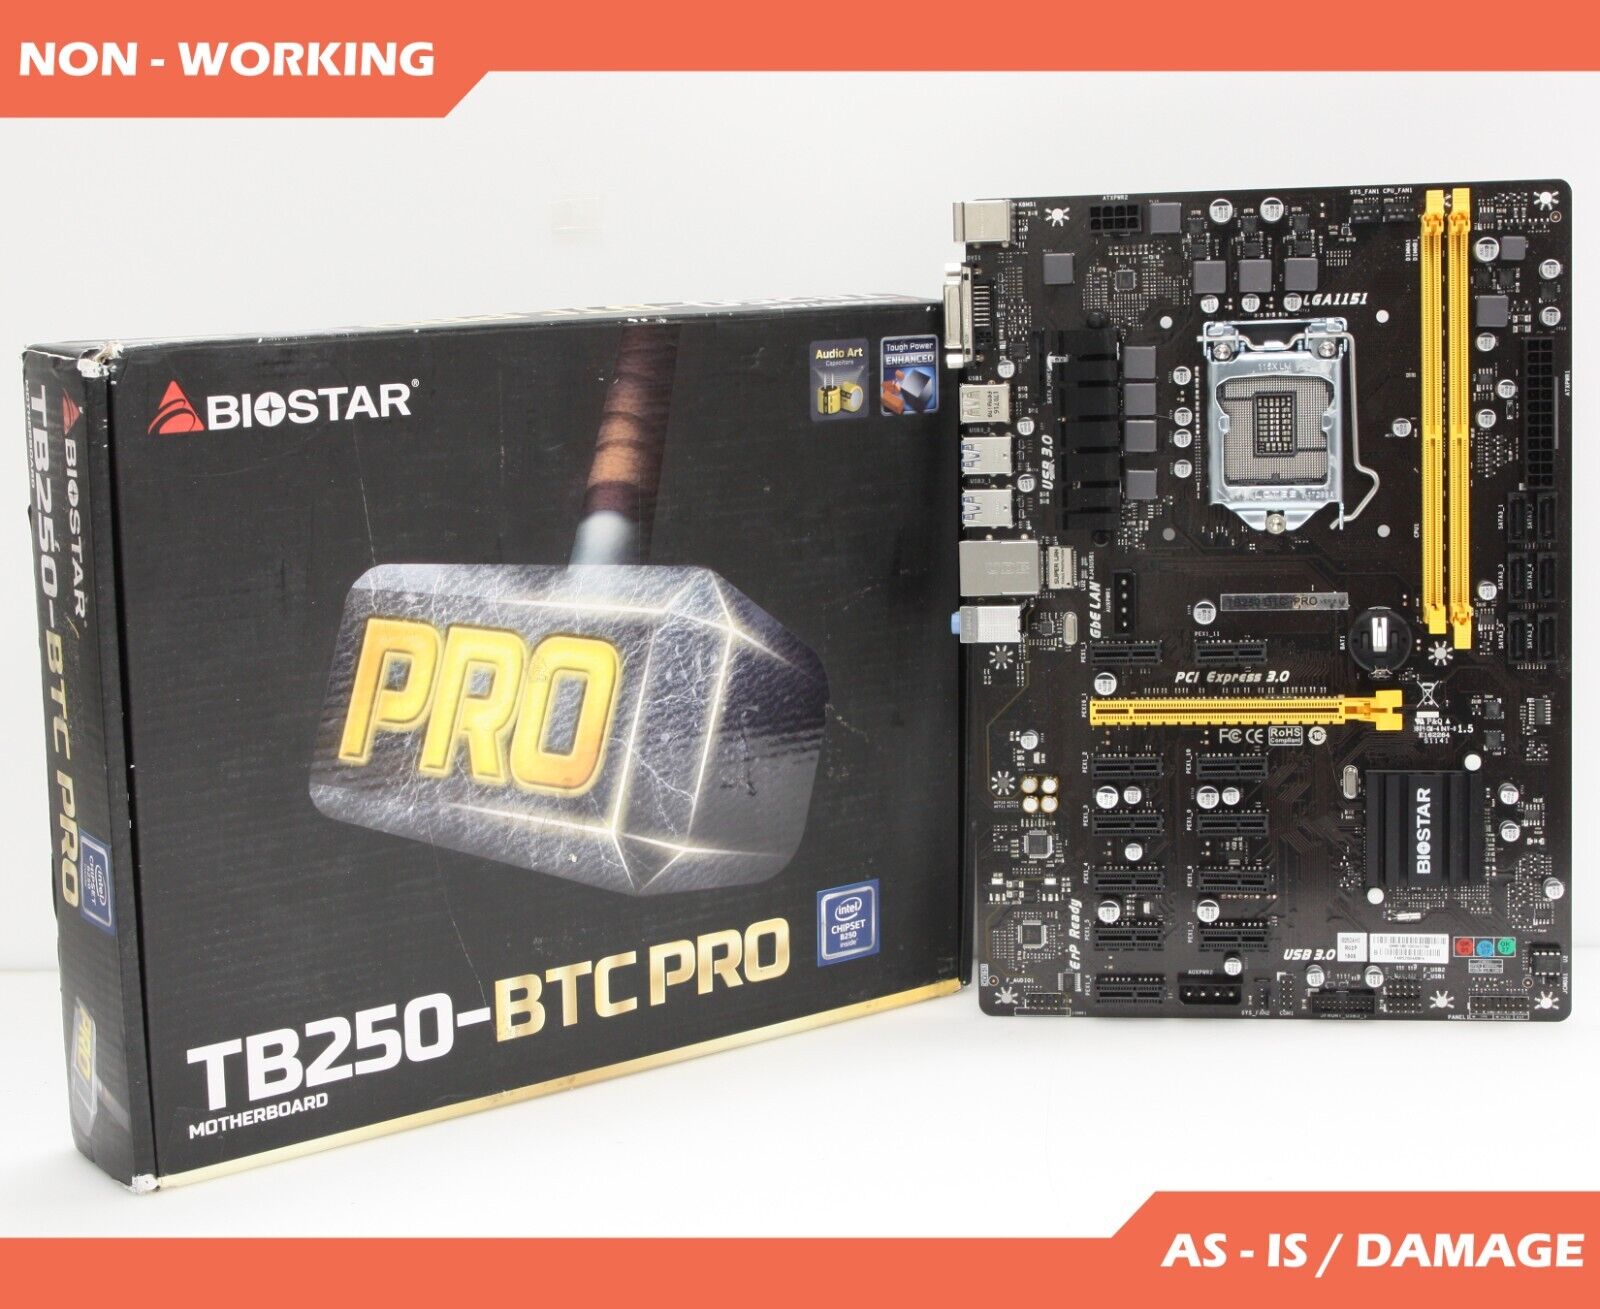 BIOSTAR TB250-BTC Ver 6.1 B250 ATX Intel Mining Motherboard * FOR PARTS *